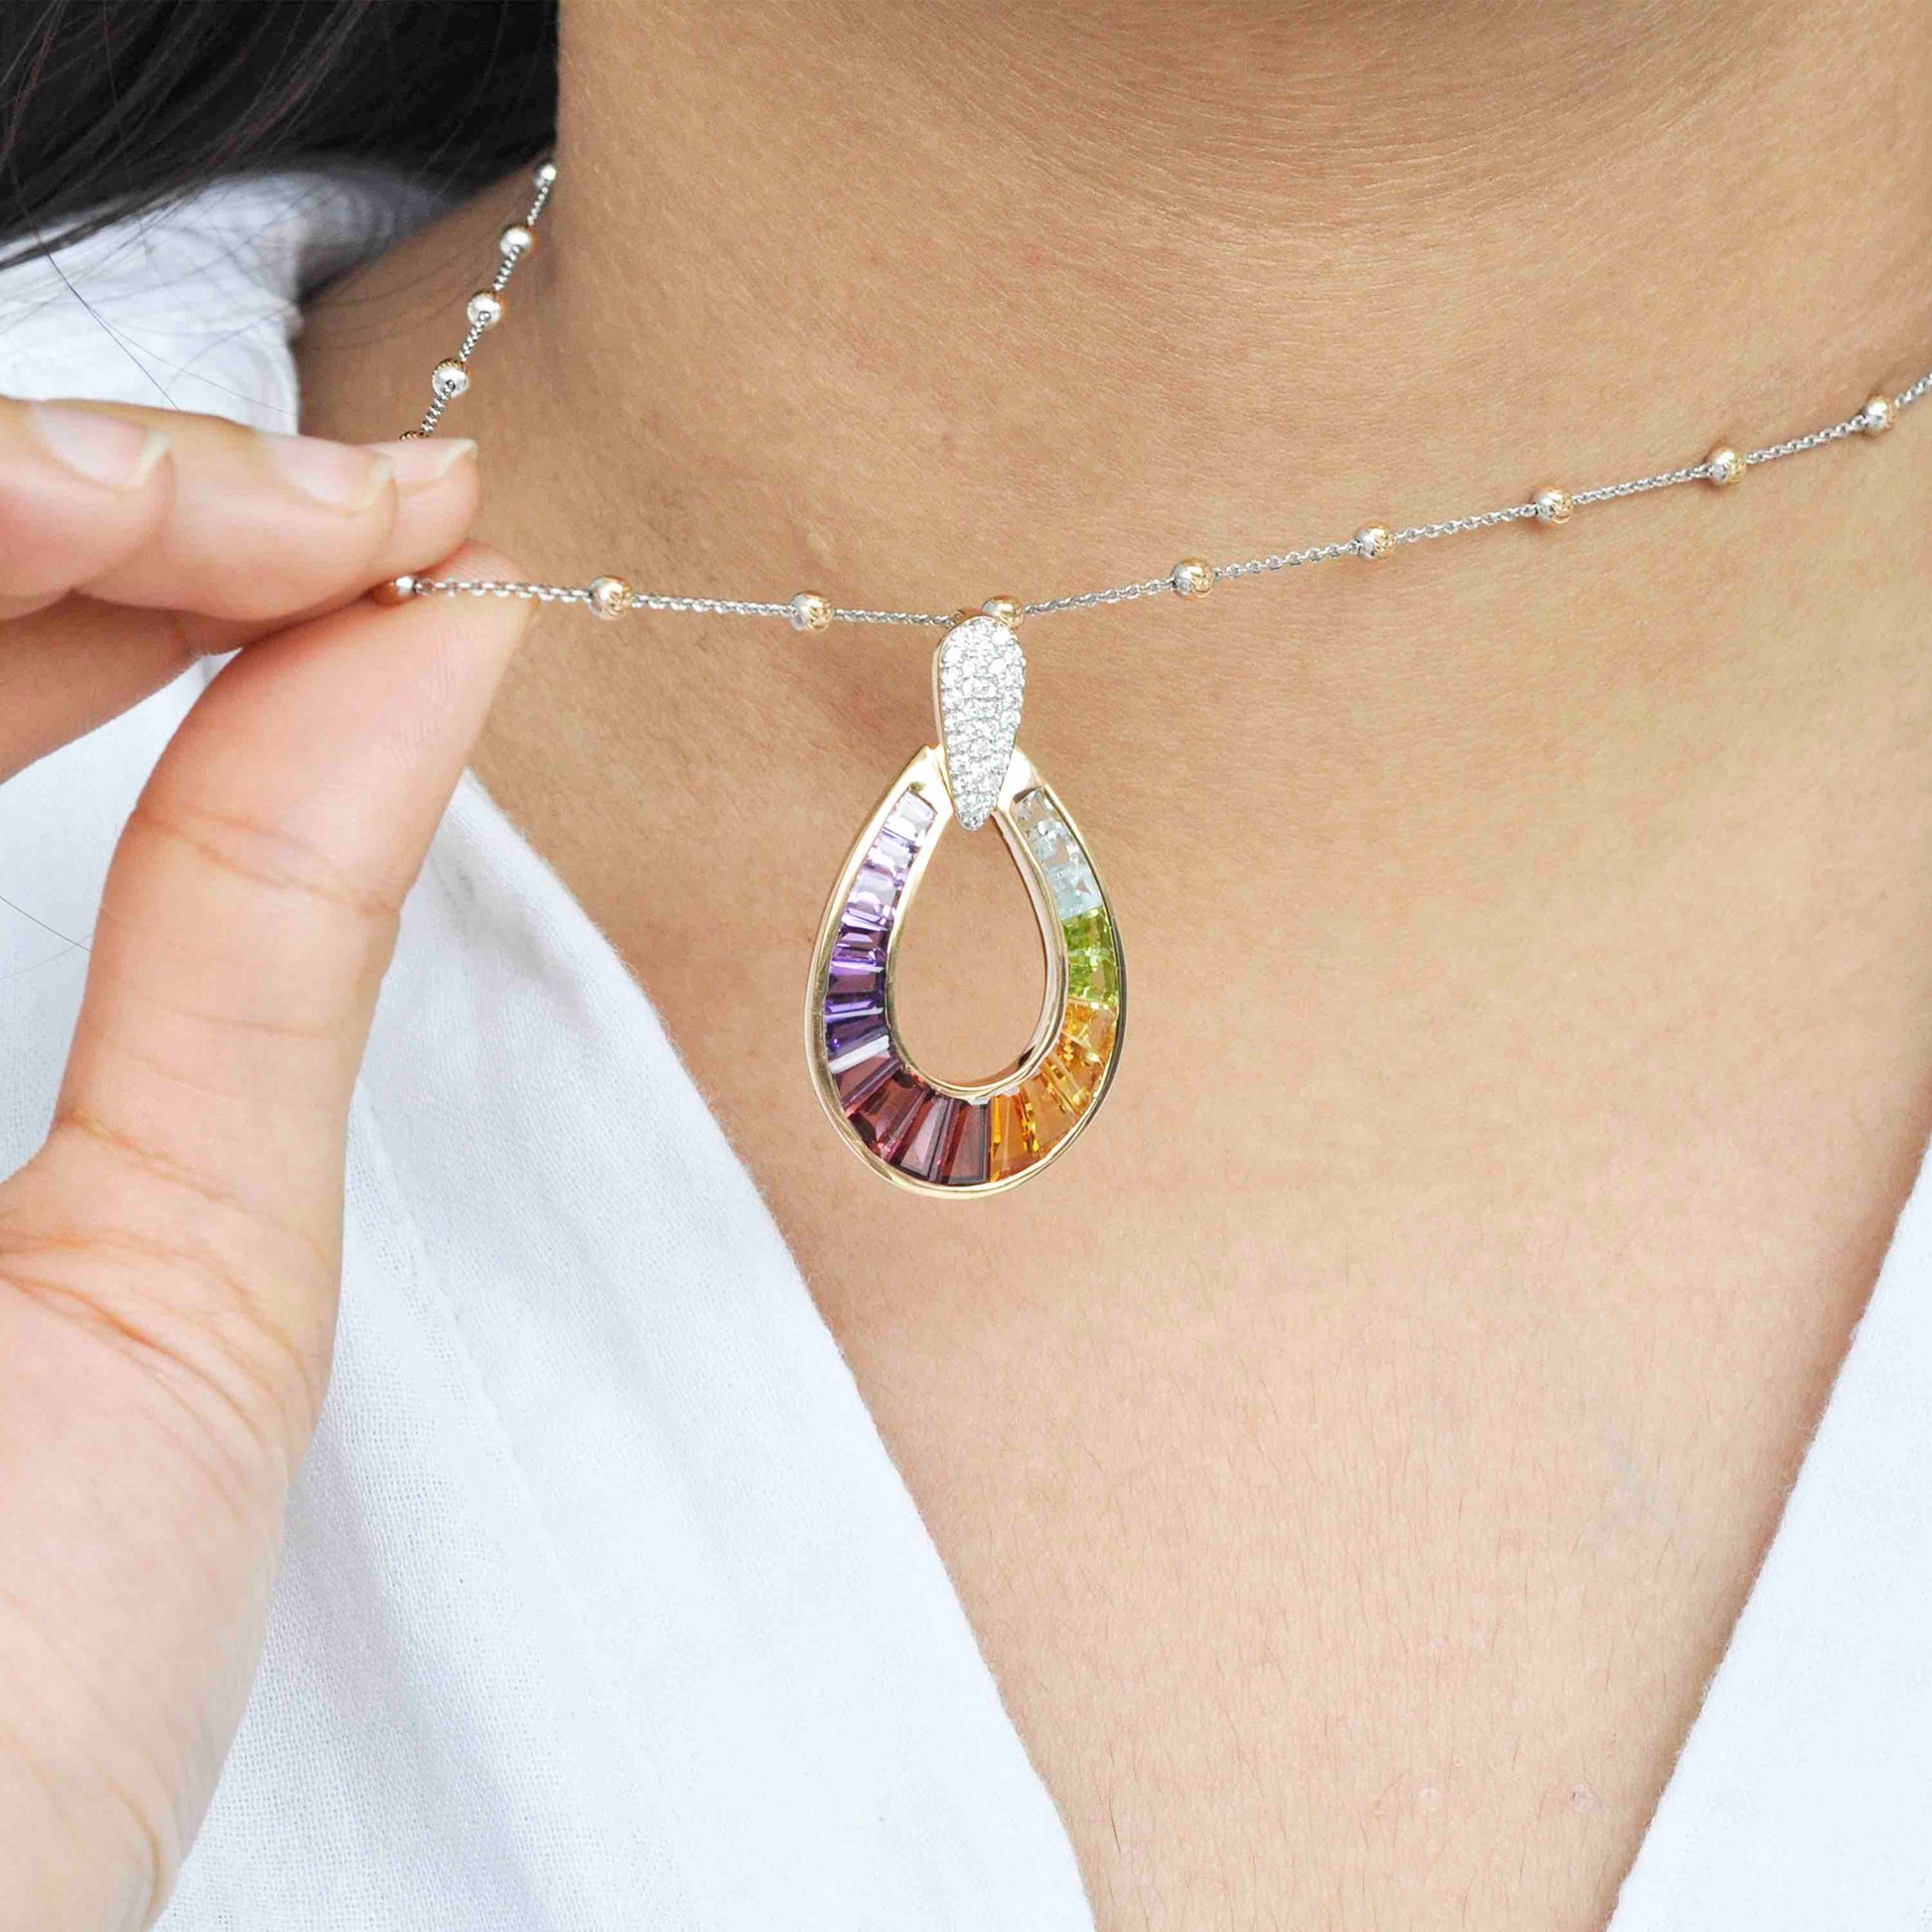 Unique multi-color necklace designs for special occasions